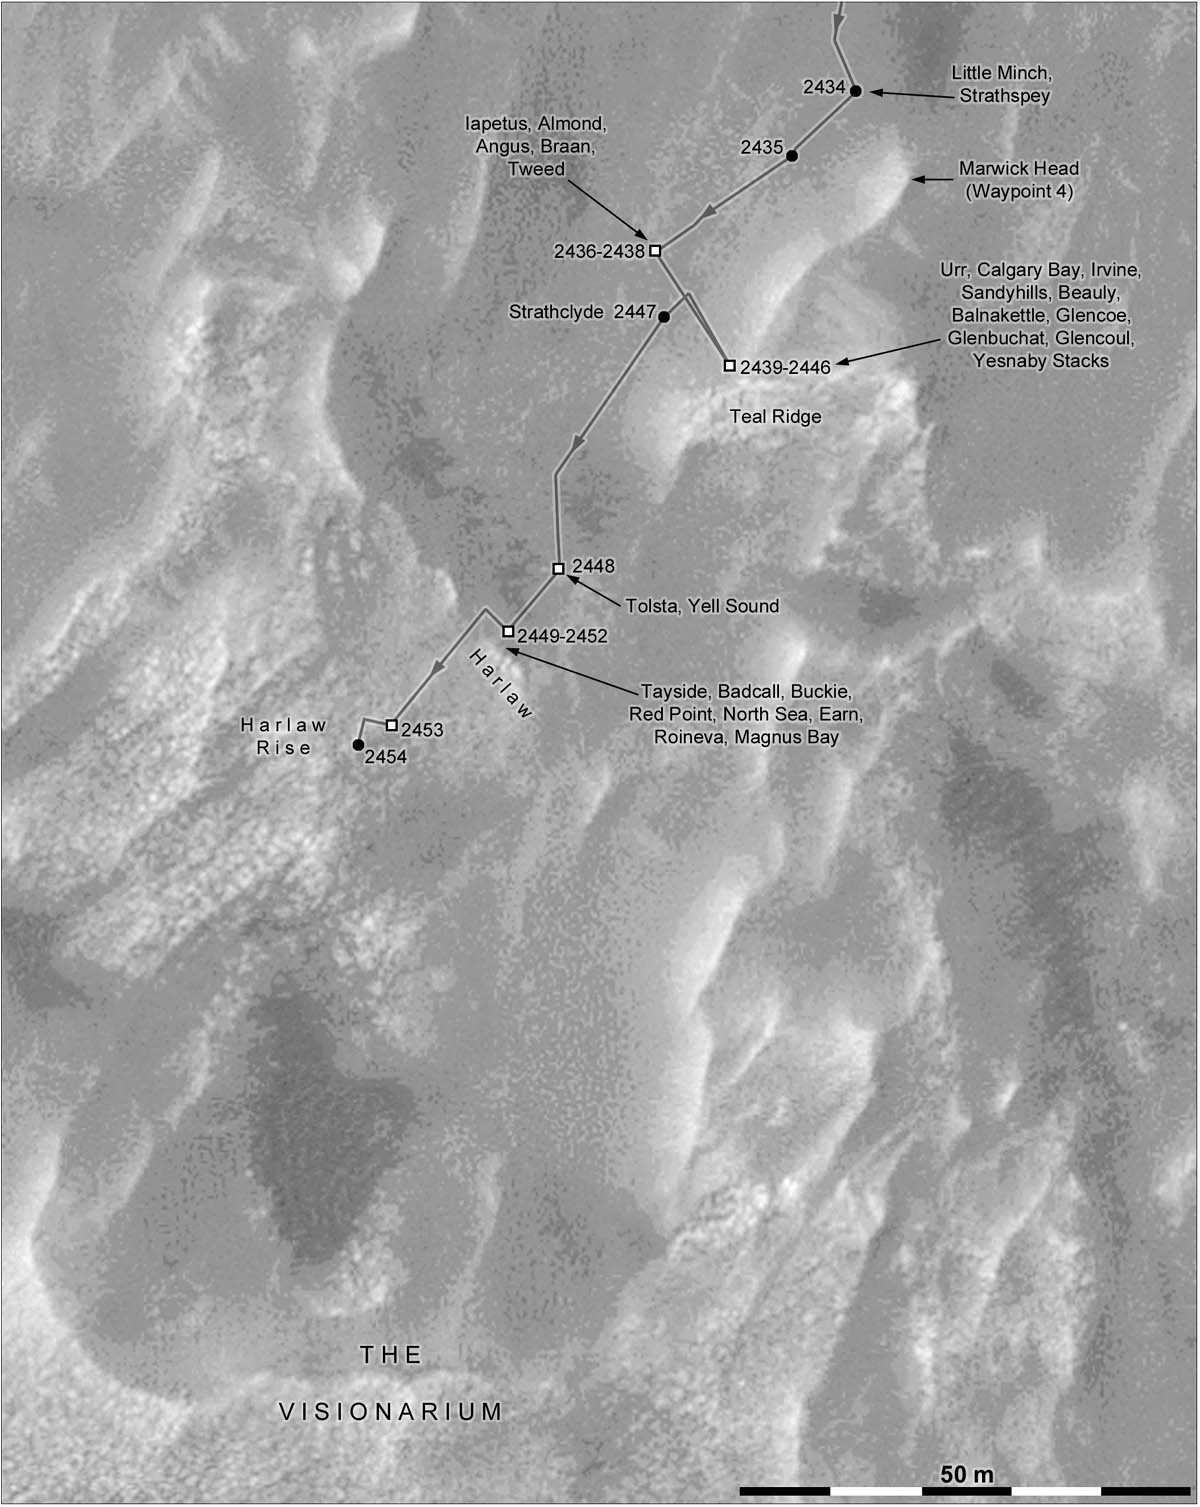 MARS: CURIOSITY u krateru  GALE Vol II. - Page 44 Index